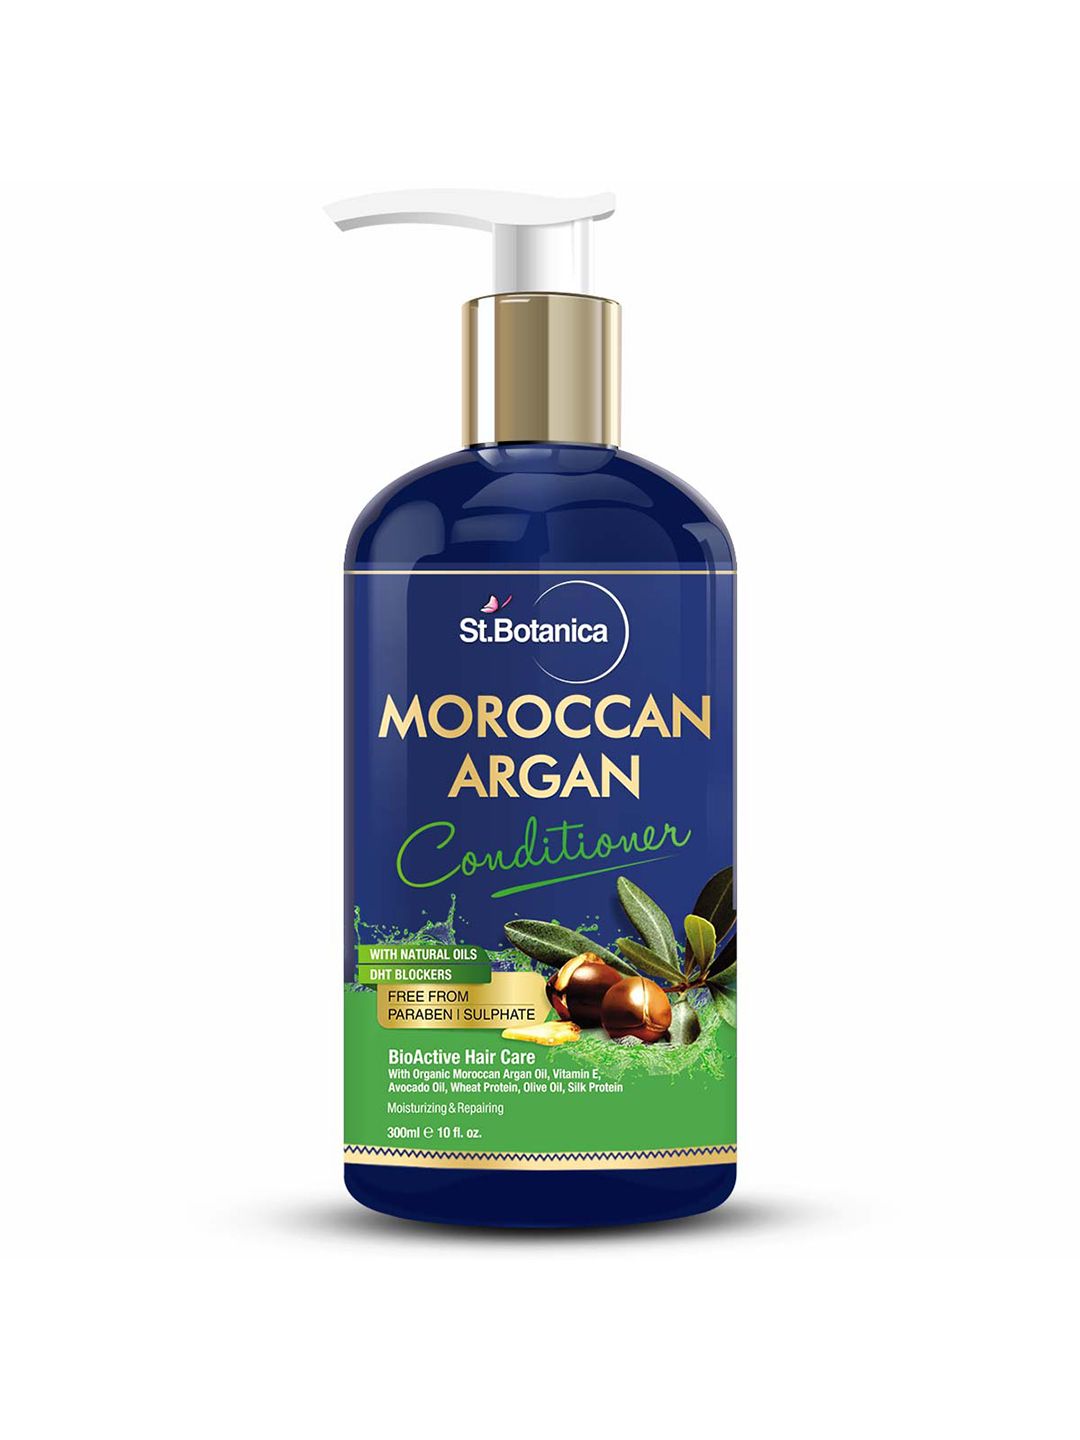 St.Botanica Moroccan Argan Hair Conditioner, 300ml Price in India